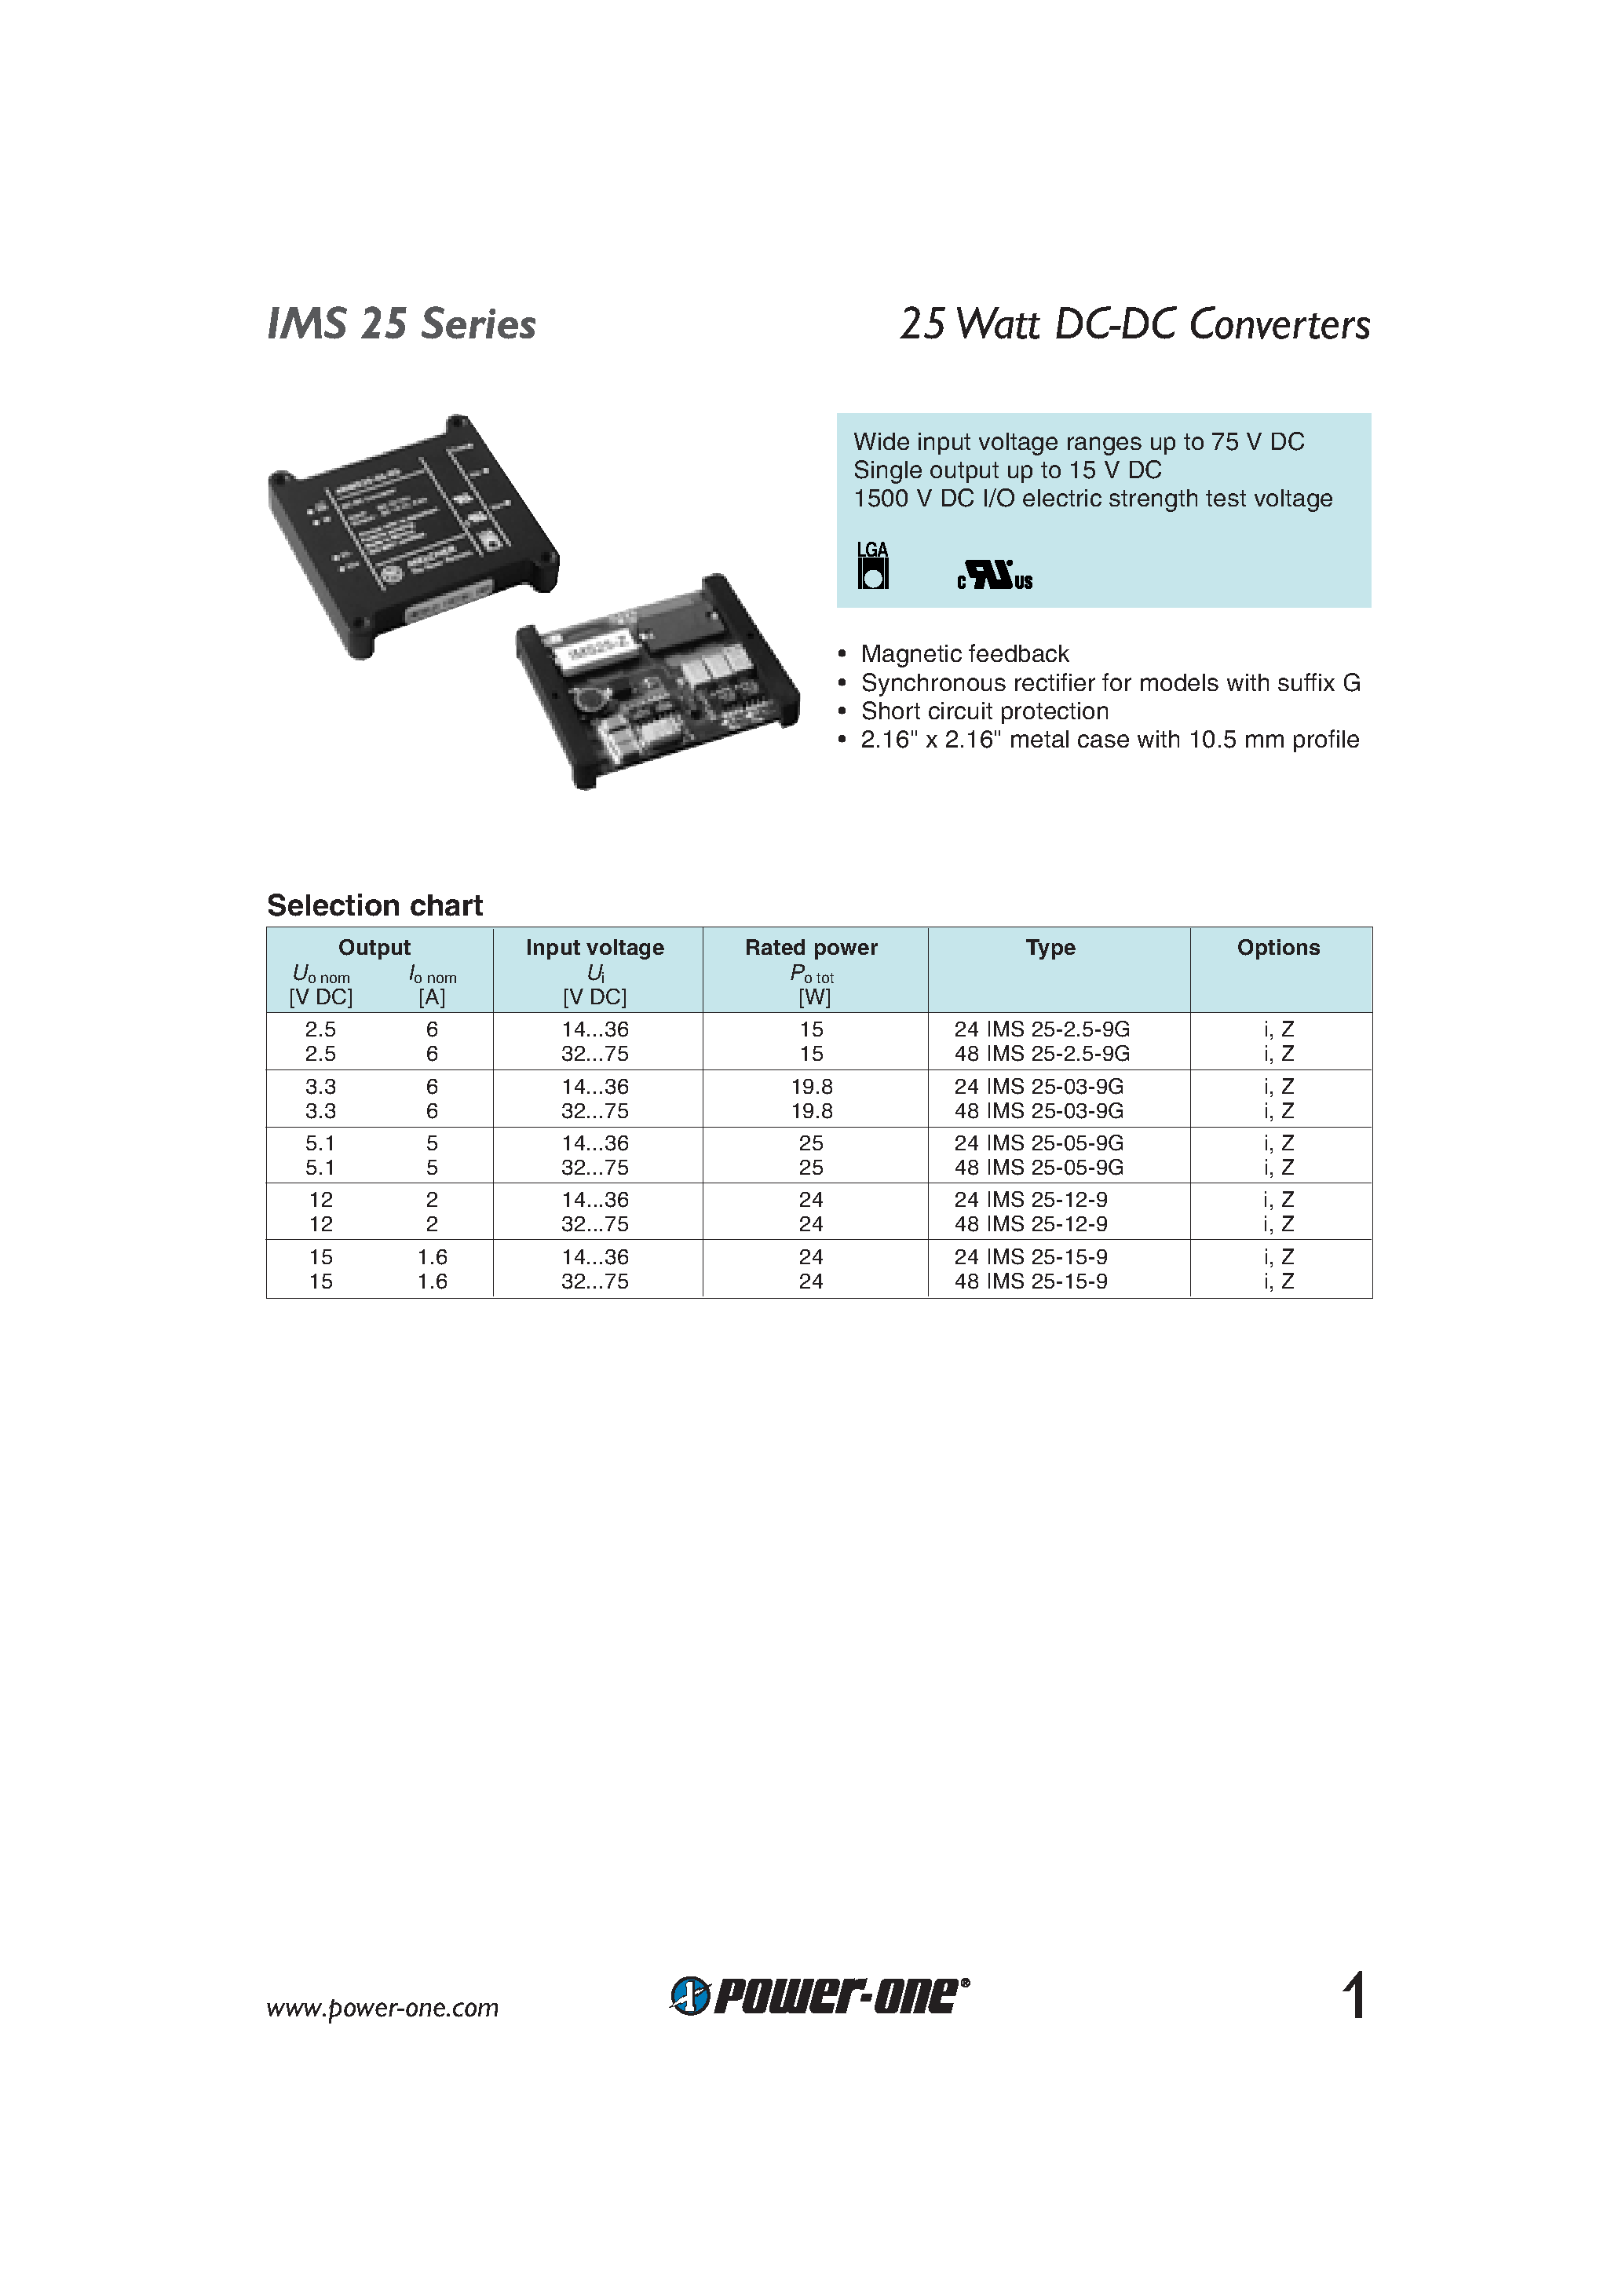 Datasheet 48IMS25-15-9 - 25 Watt DC-DC Converters page 1